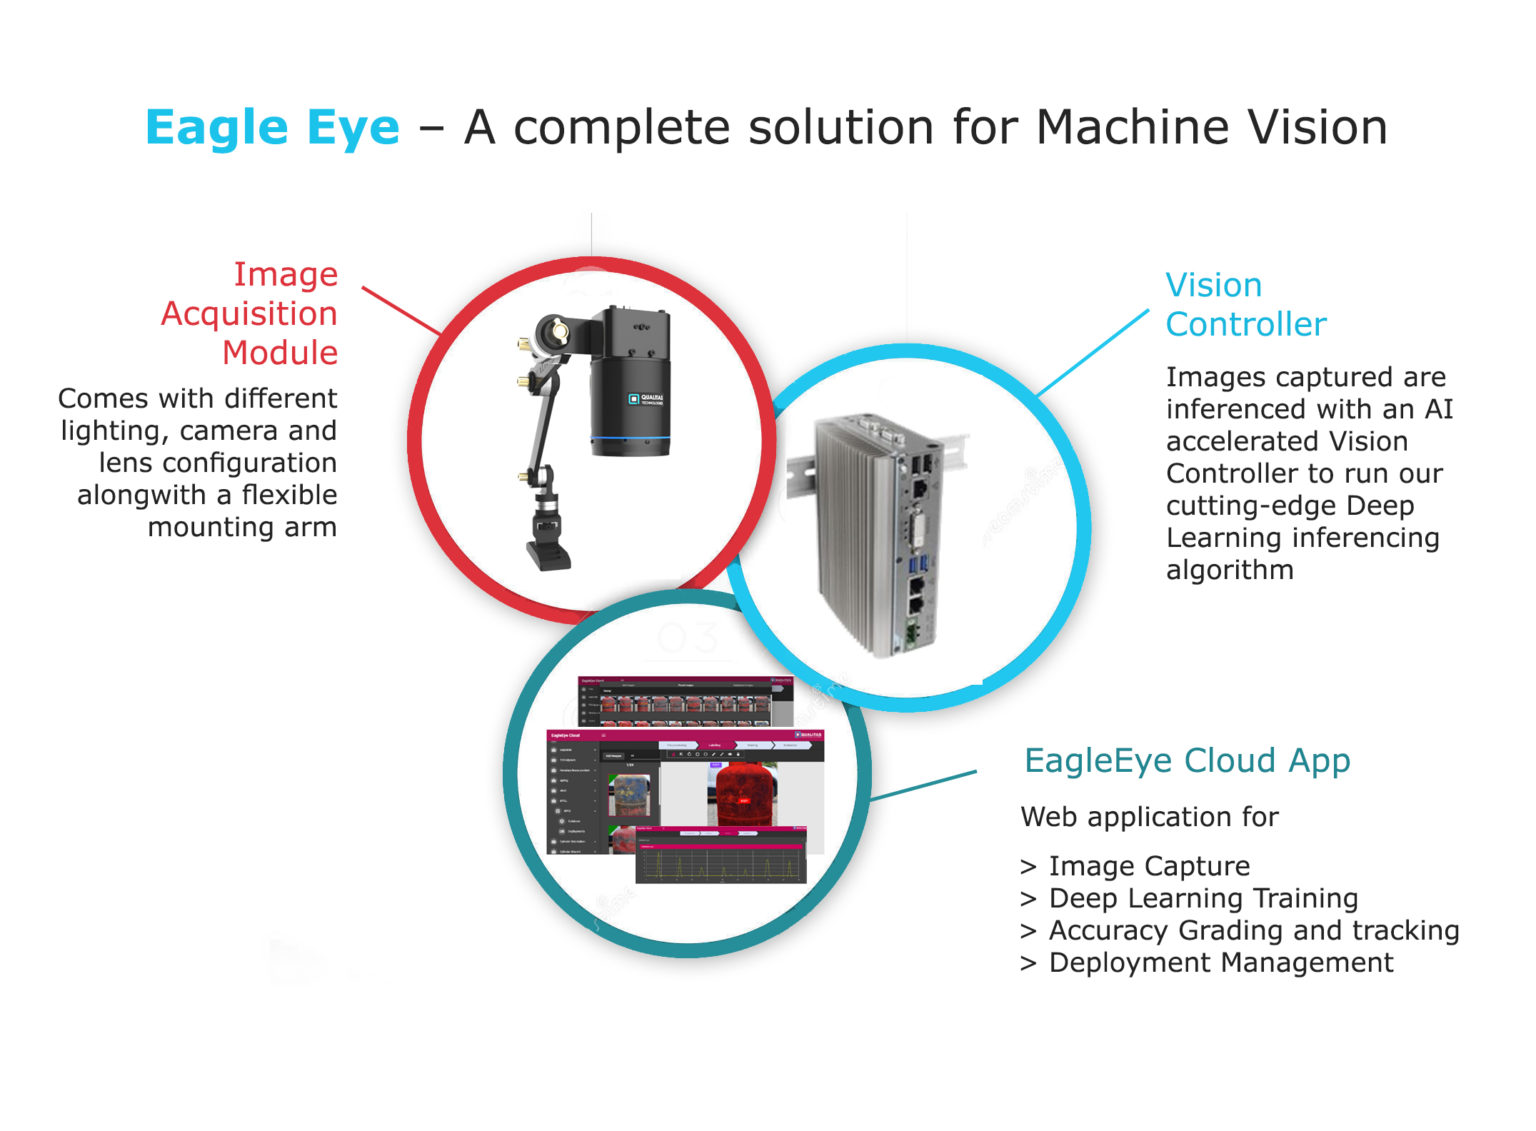 Machine Vision Software